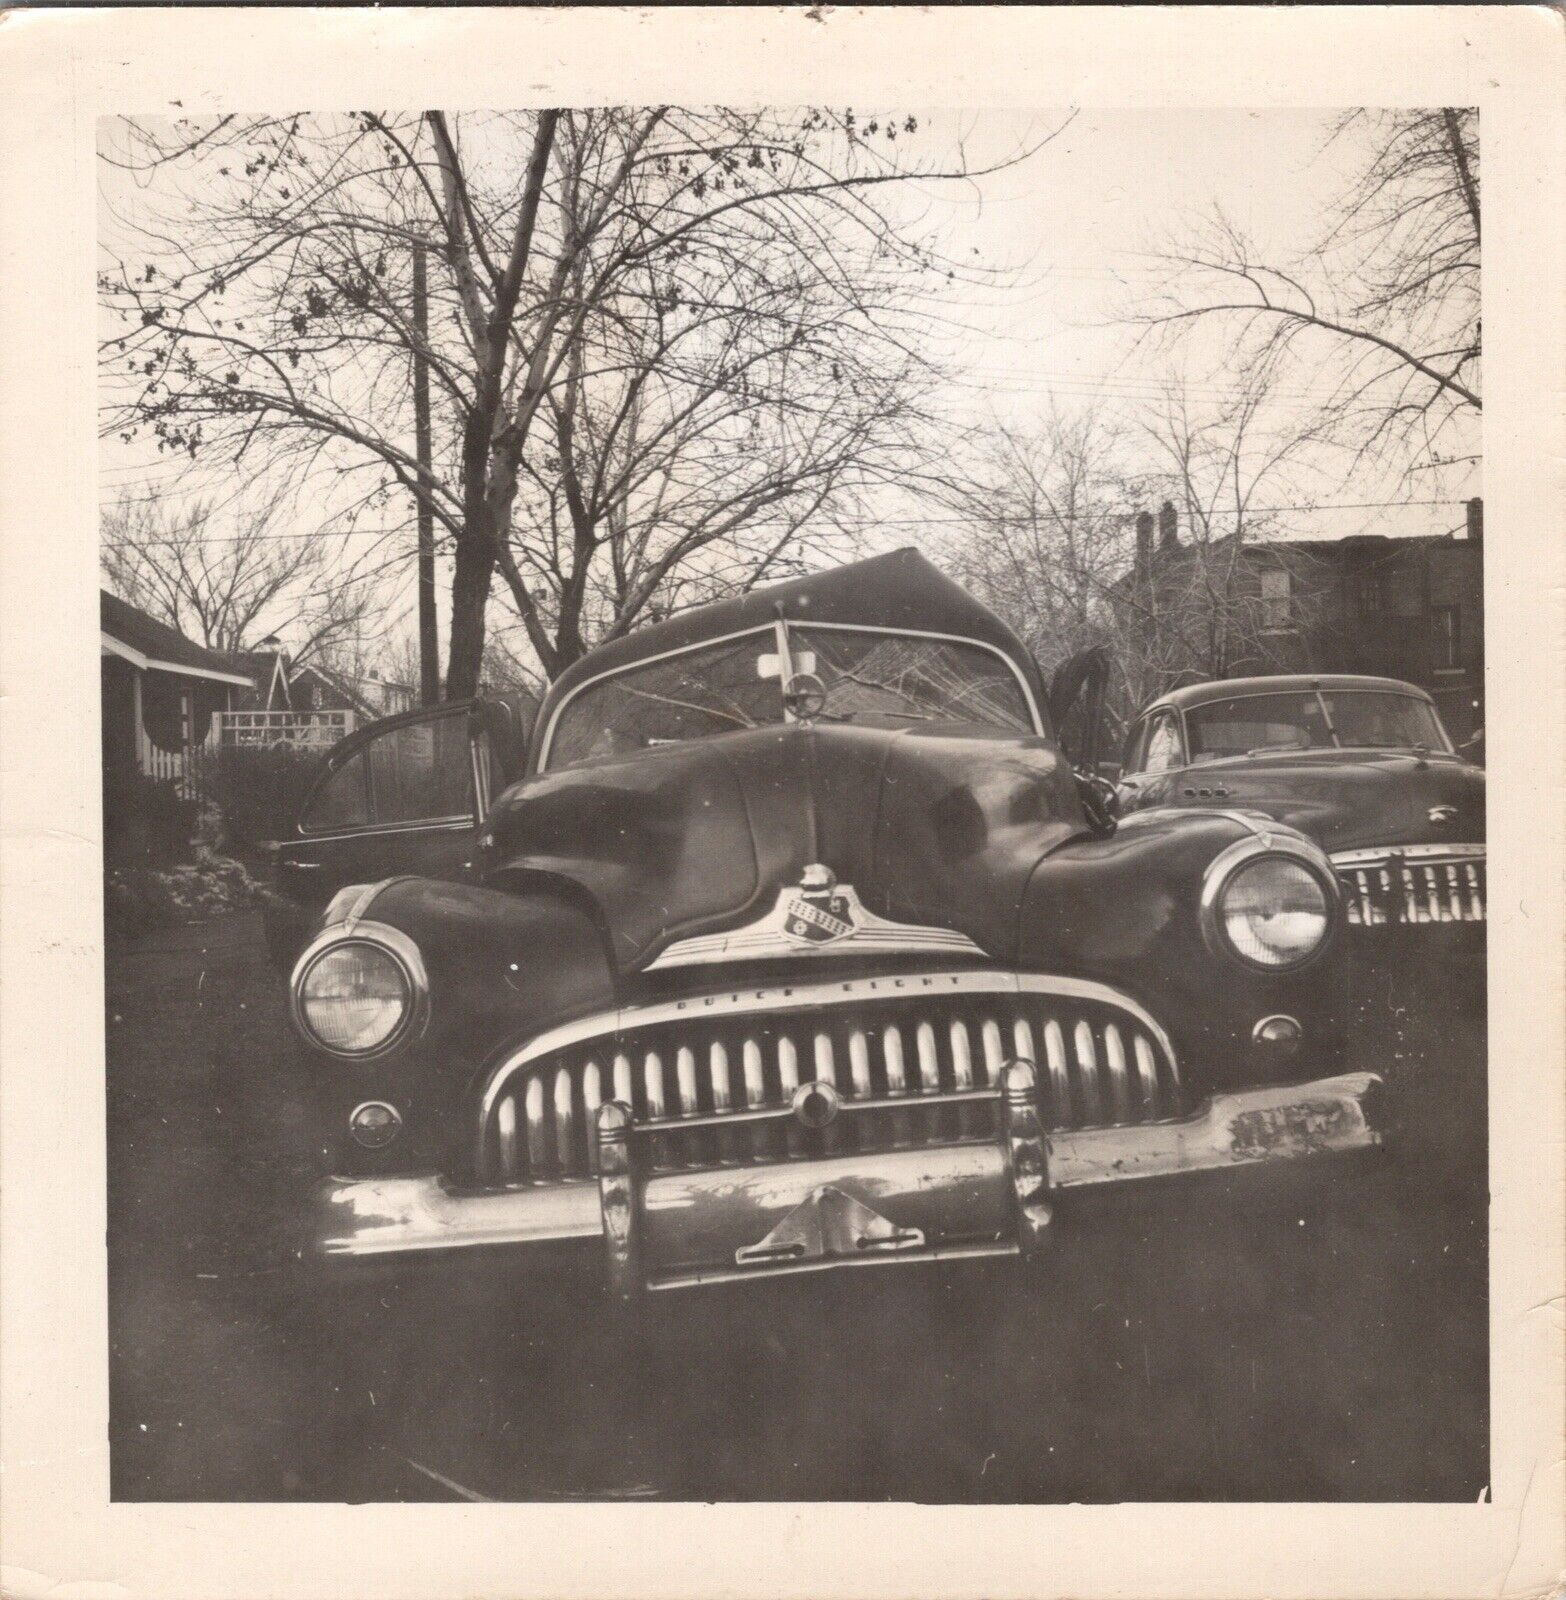 Vtg Found B&W Photo 1955 Car Wreck Accident Damage Vehicle Crash St Louis